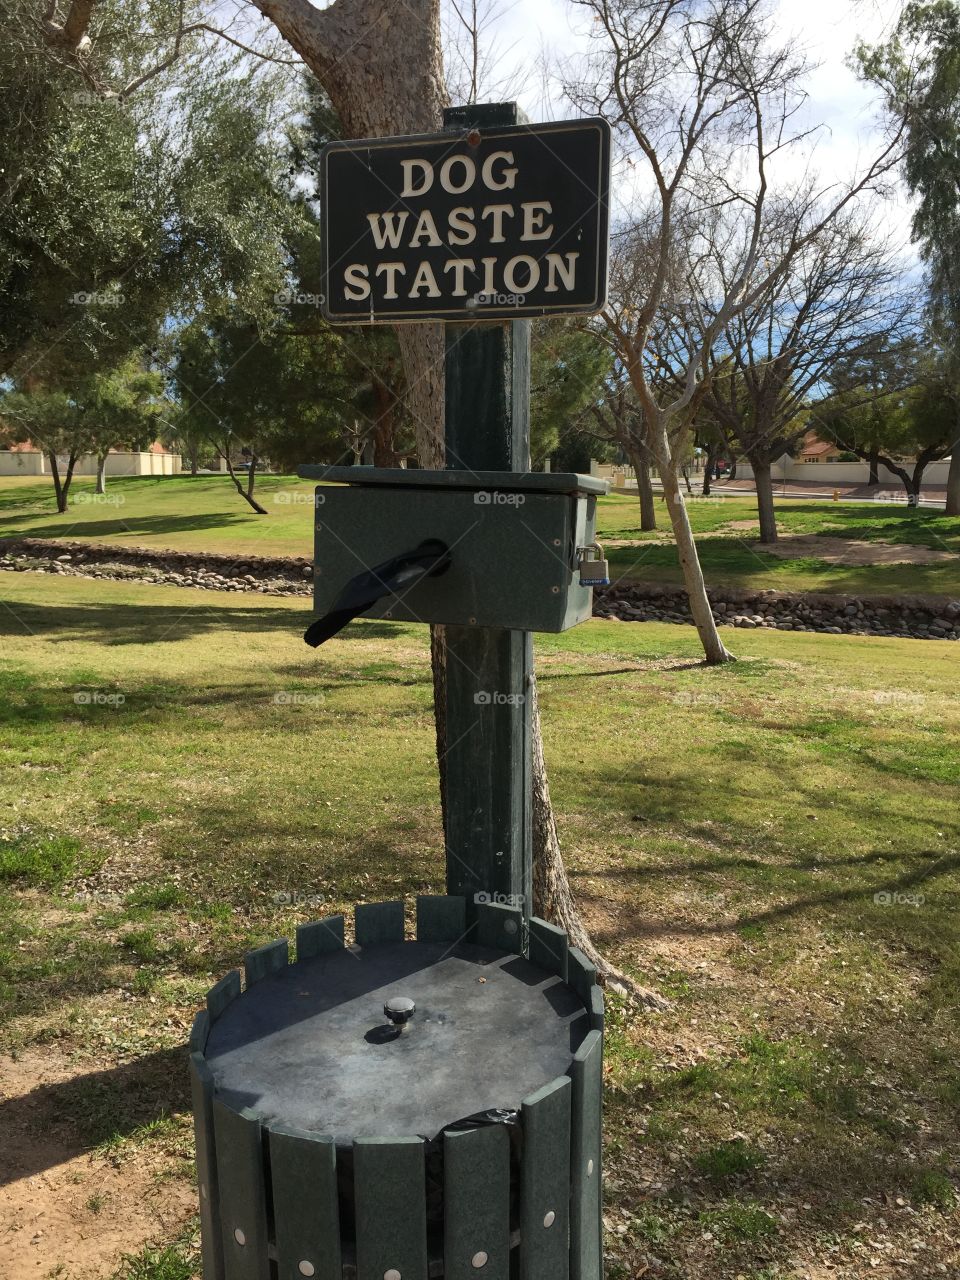 Dog waste station in a park